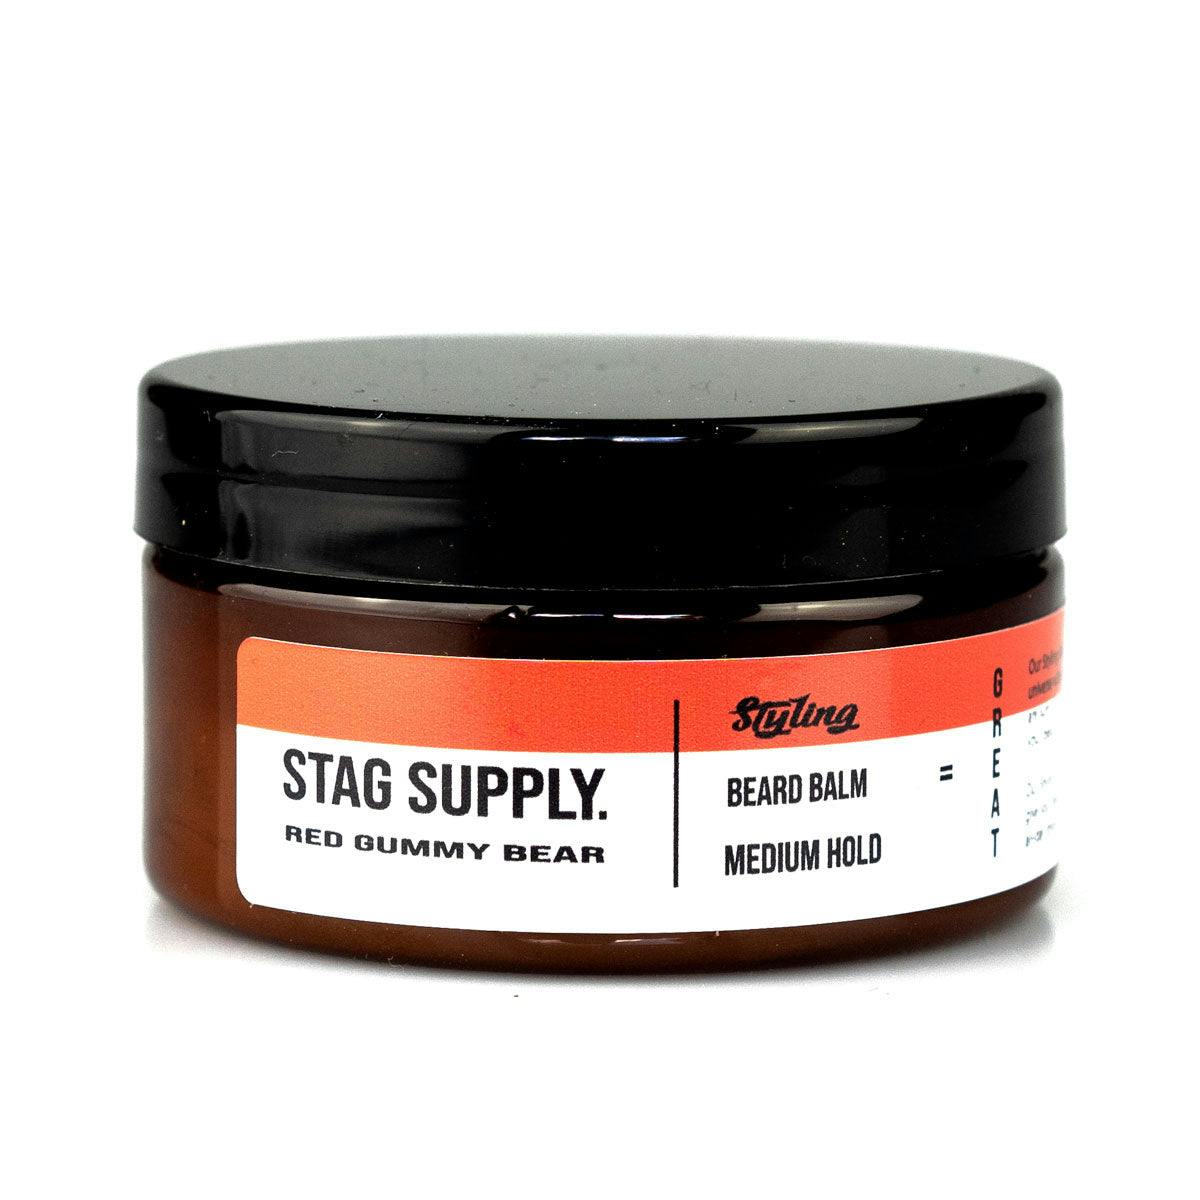 Stag Supply Styling Beard Balm - Red Gummy Bear 100ml